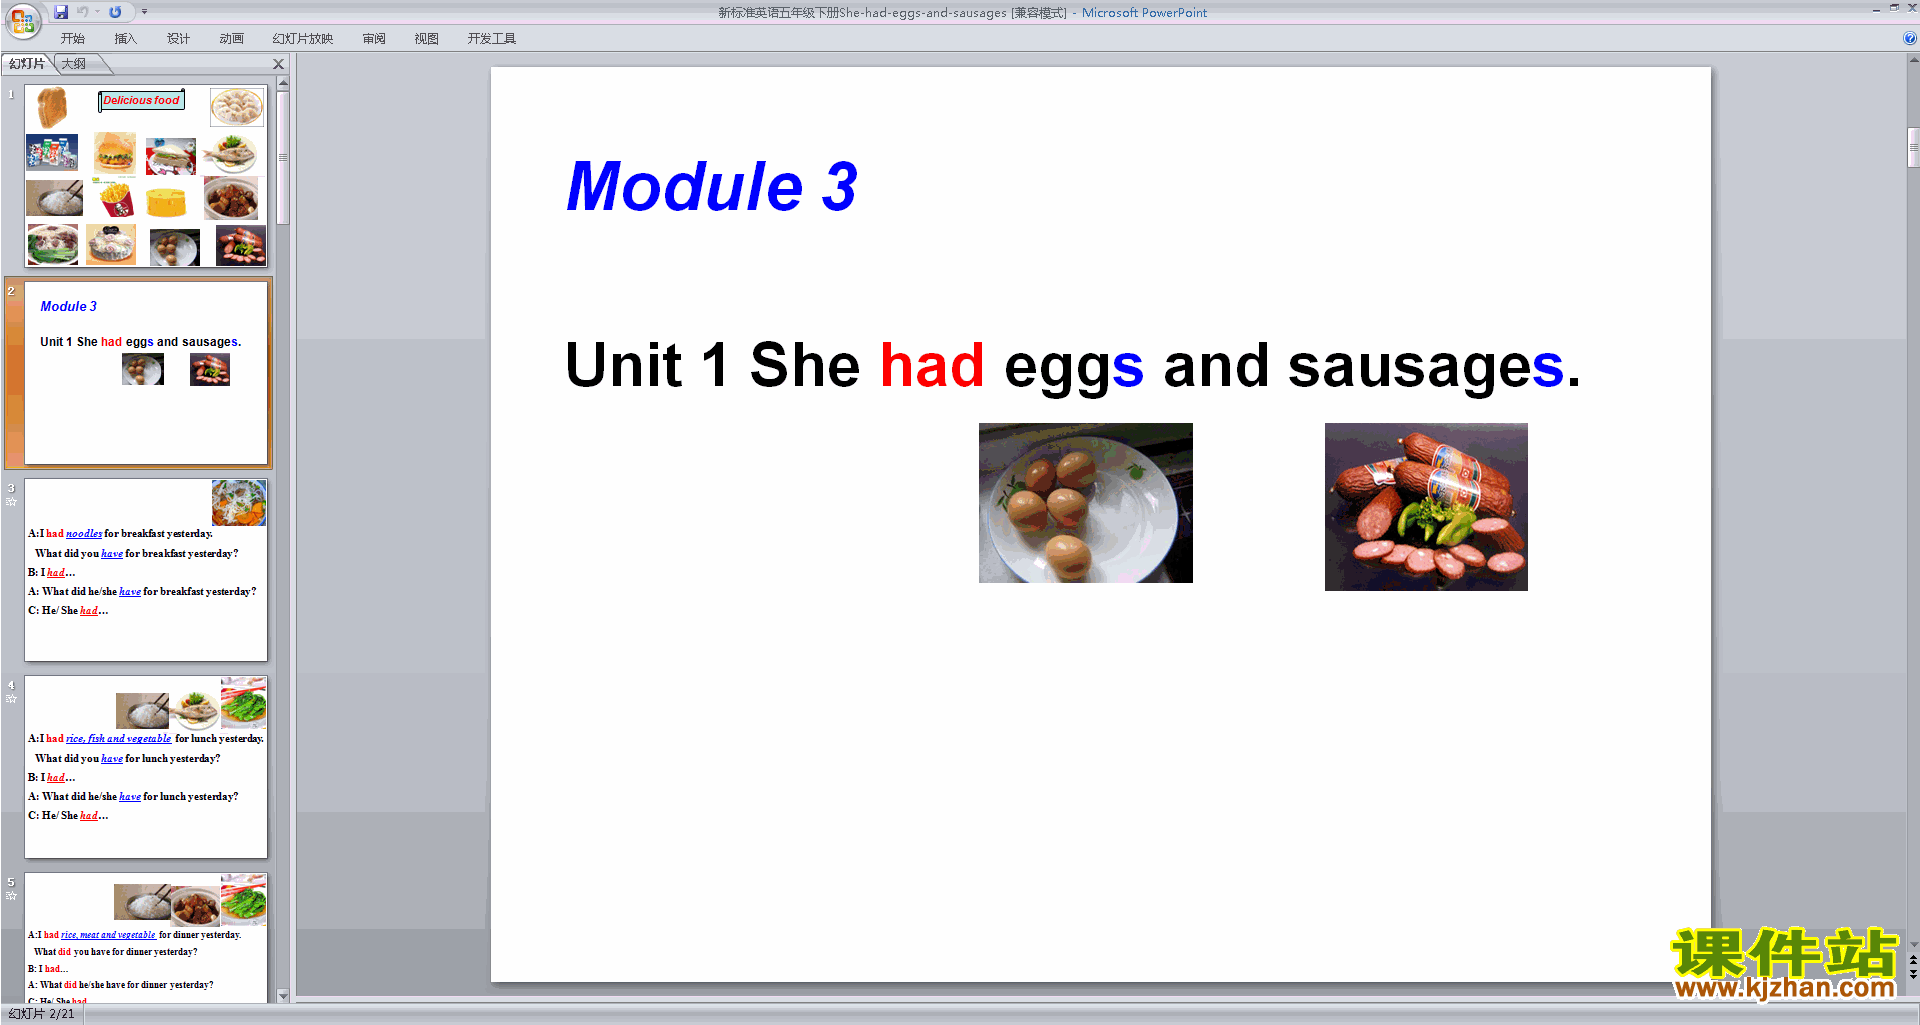 пModule3 Unit1 She had eggs and sausagesμppt